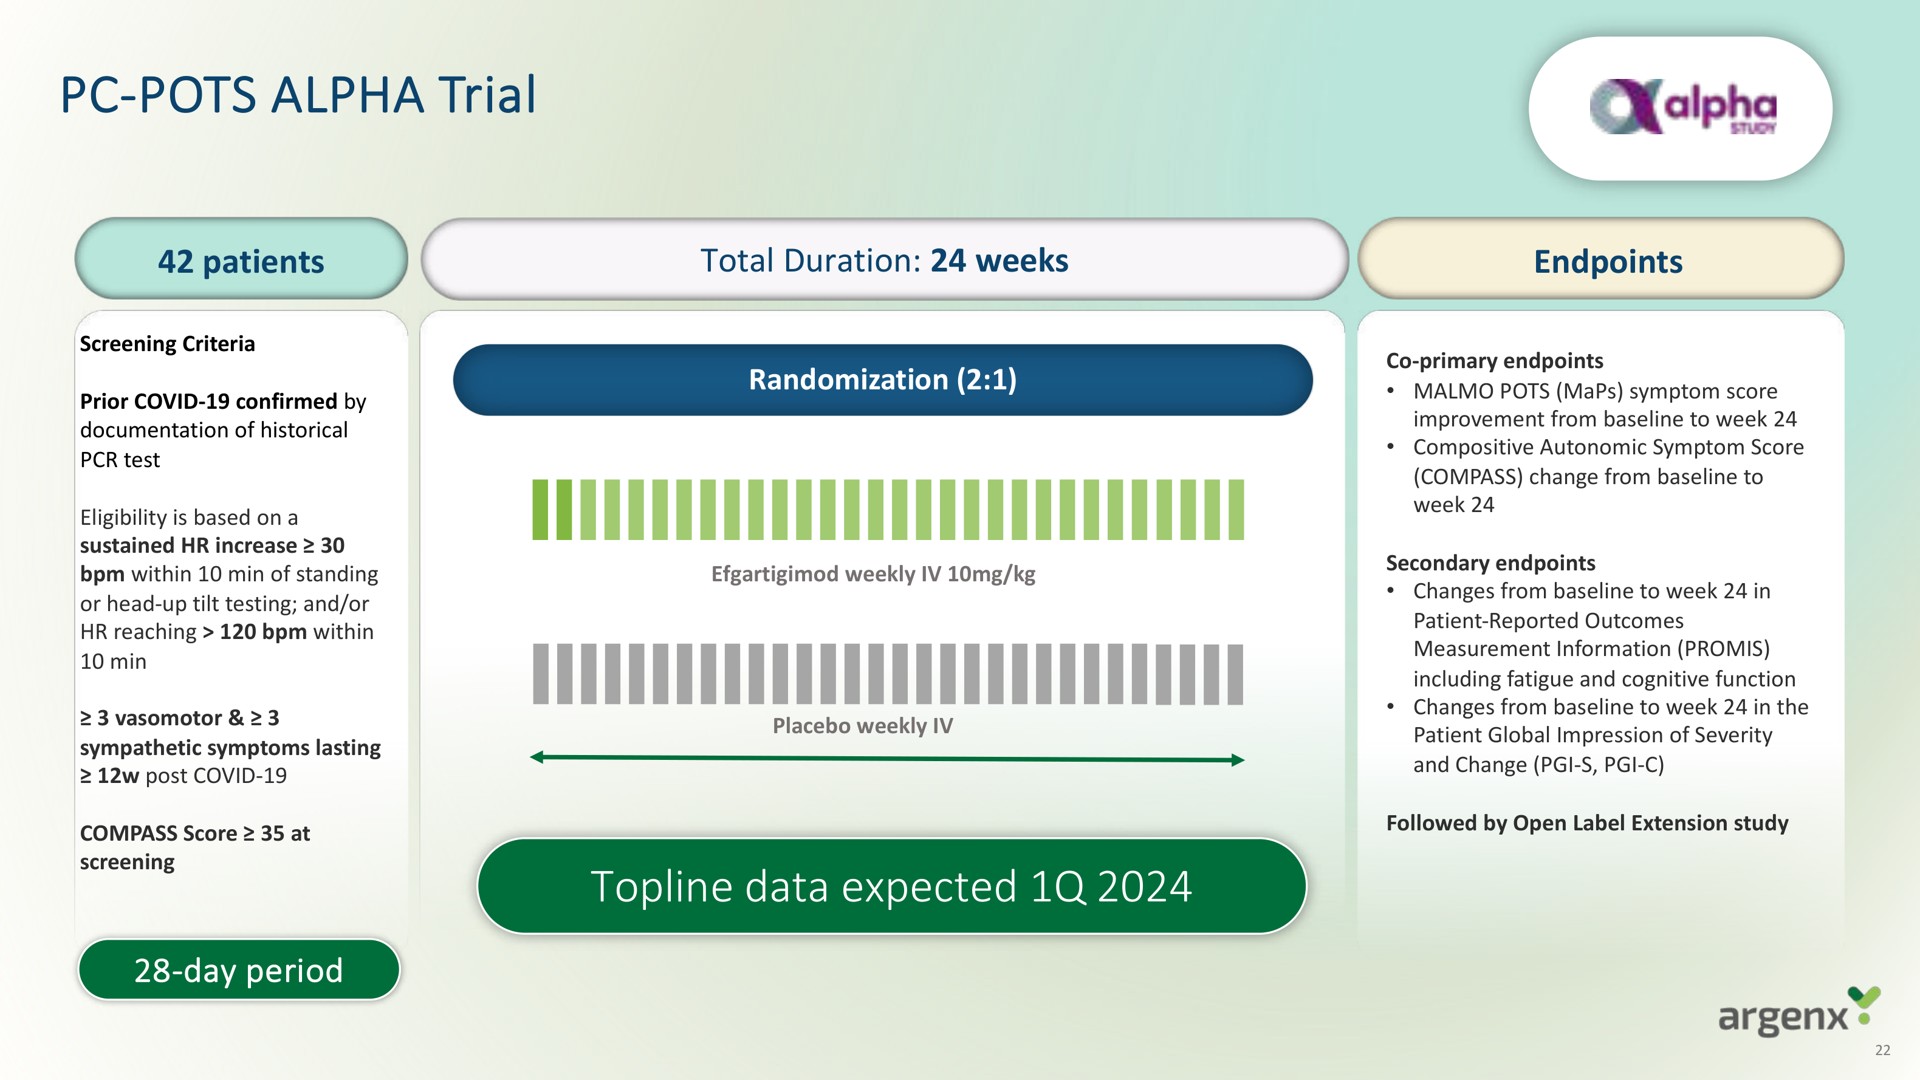 pots alpha trial topline data expected a | argenx SE